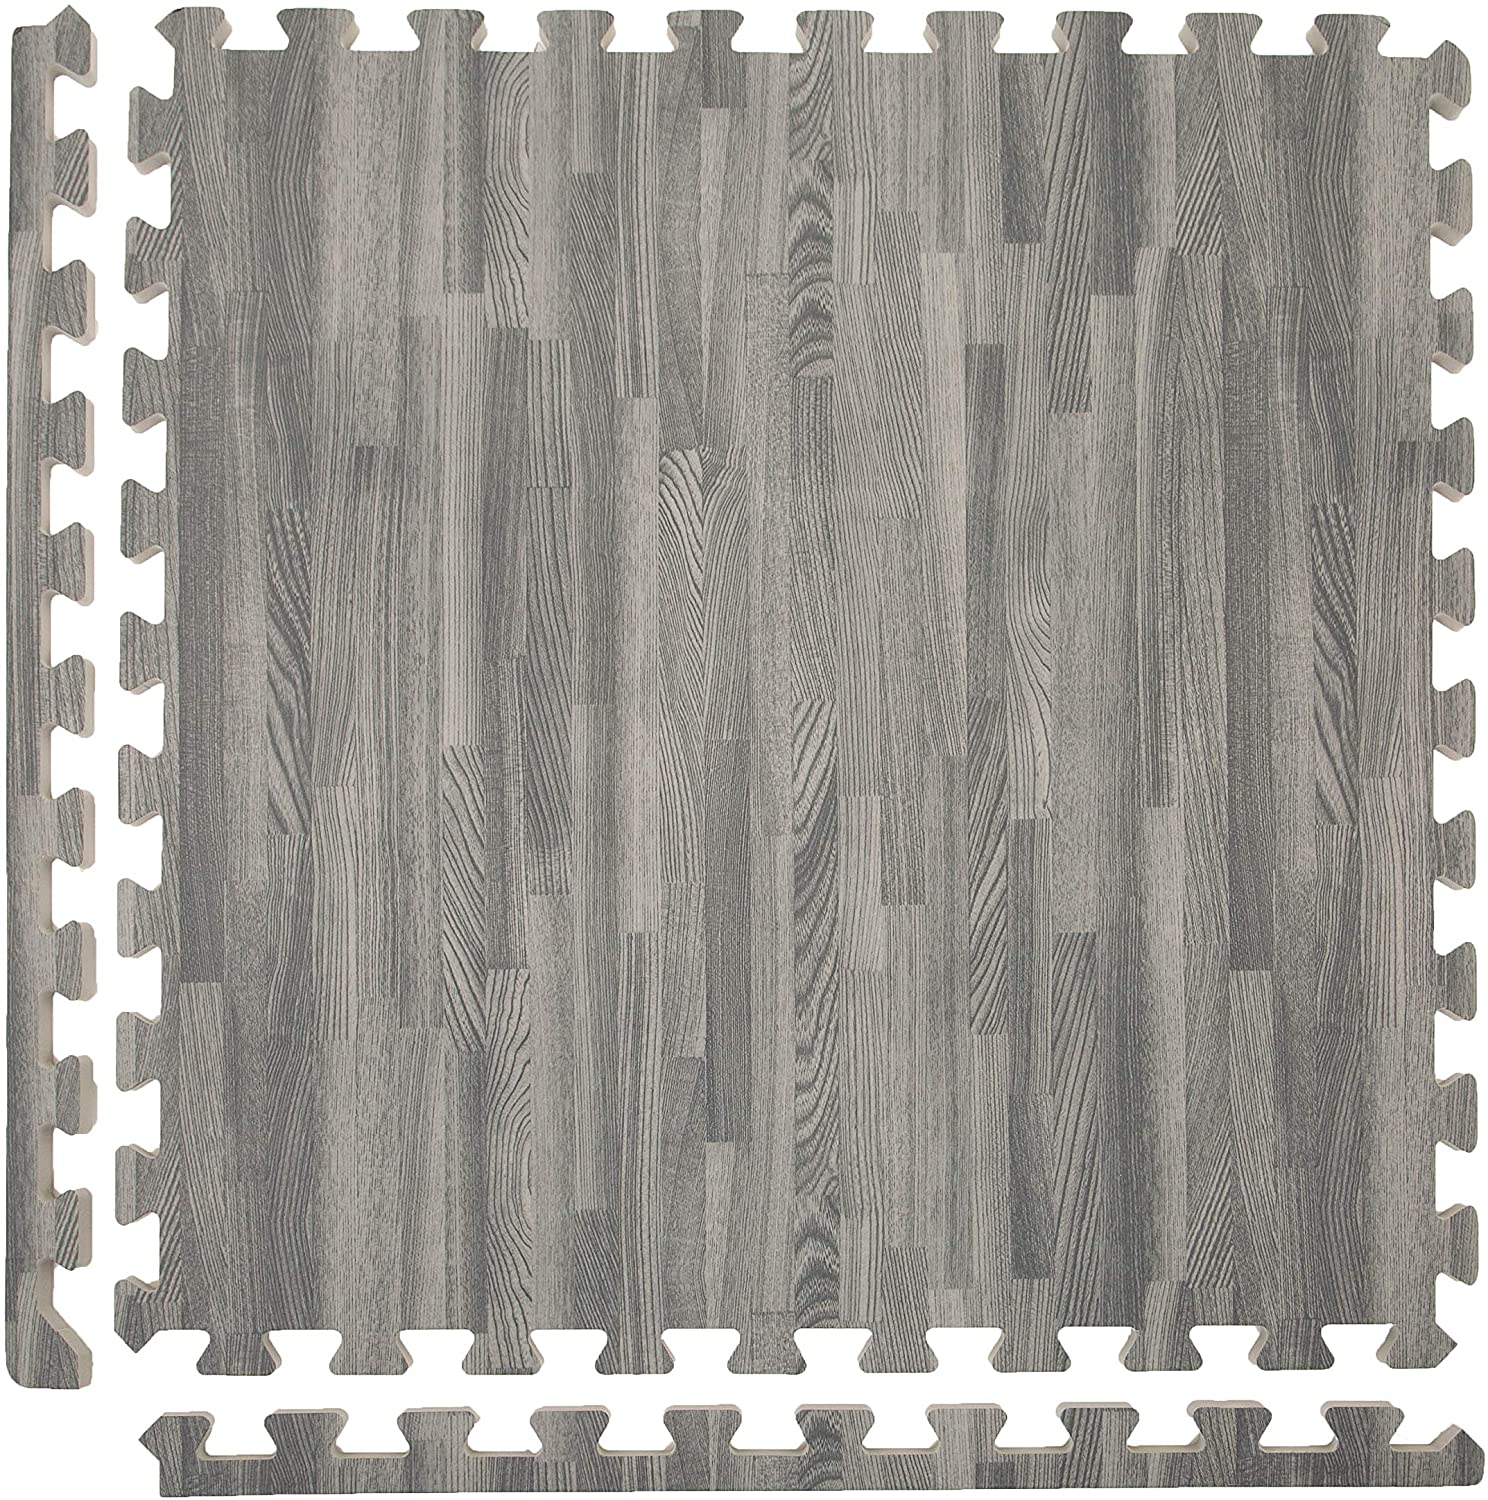 IncStores Soft Wood Interlocking Foam Tile Mats